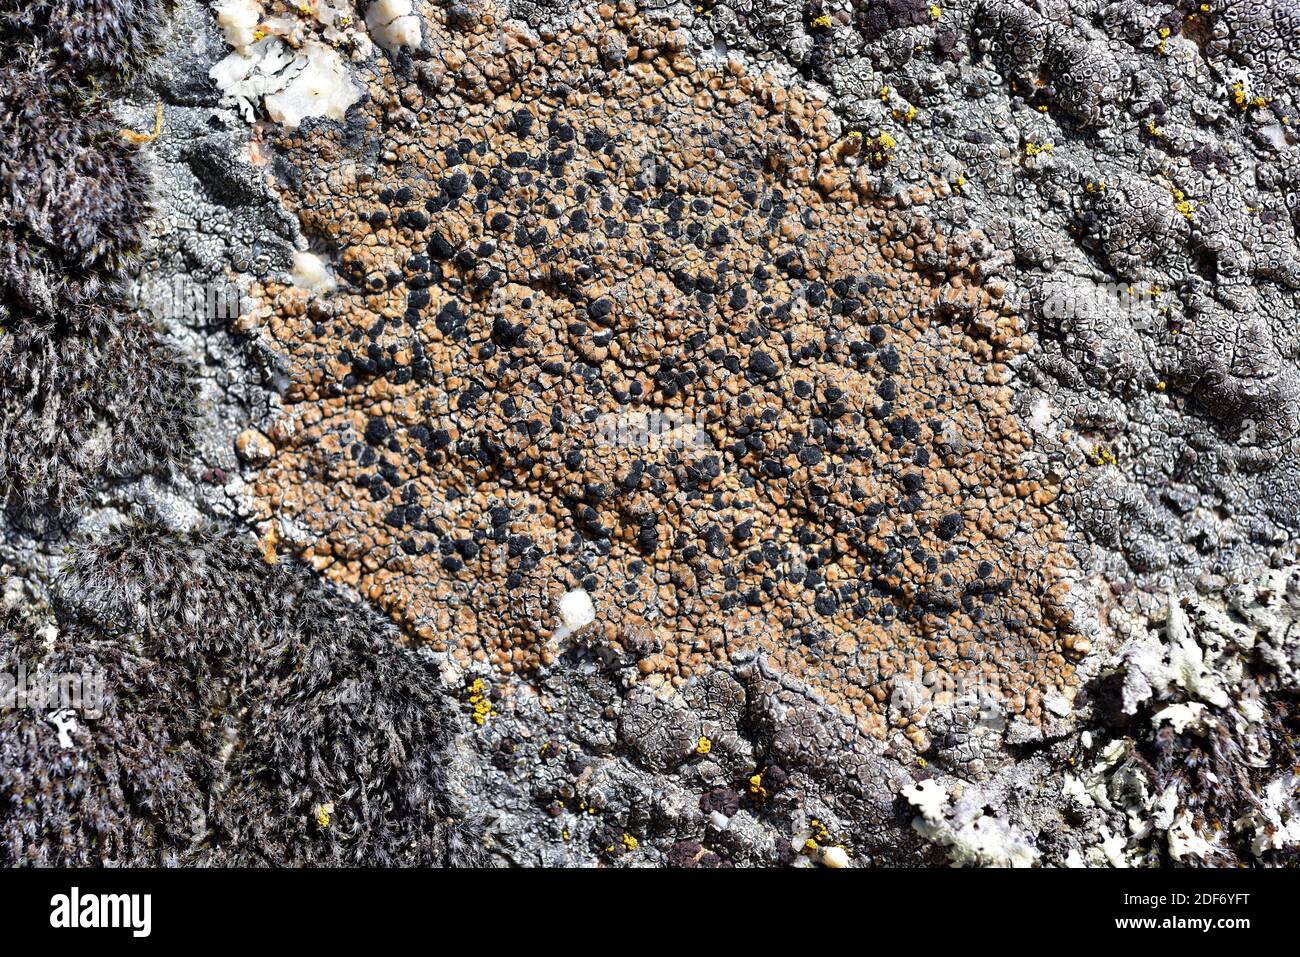 Leciidea atrobrunnea es un liquen crustoso con apotecia negra. Esta foto fue tomada en el Parque Natural Arribes del Duero, provincia de Zamora, Foto de stock